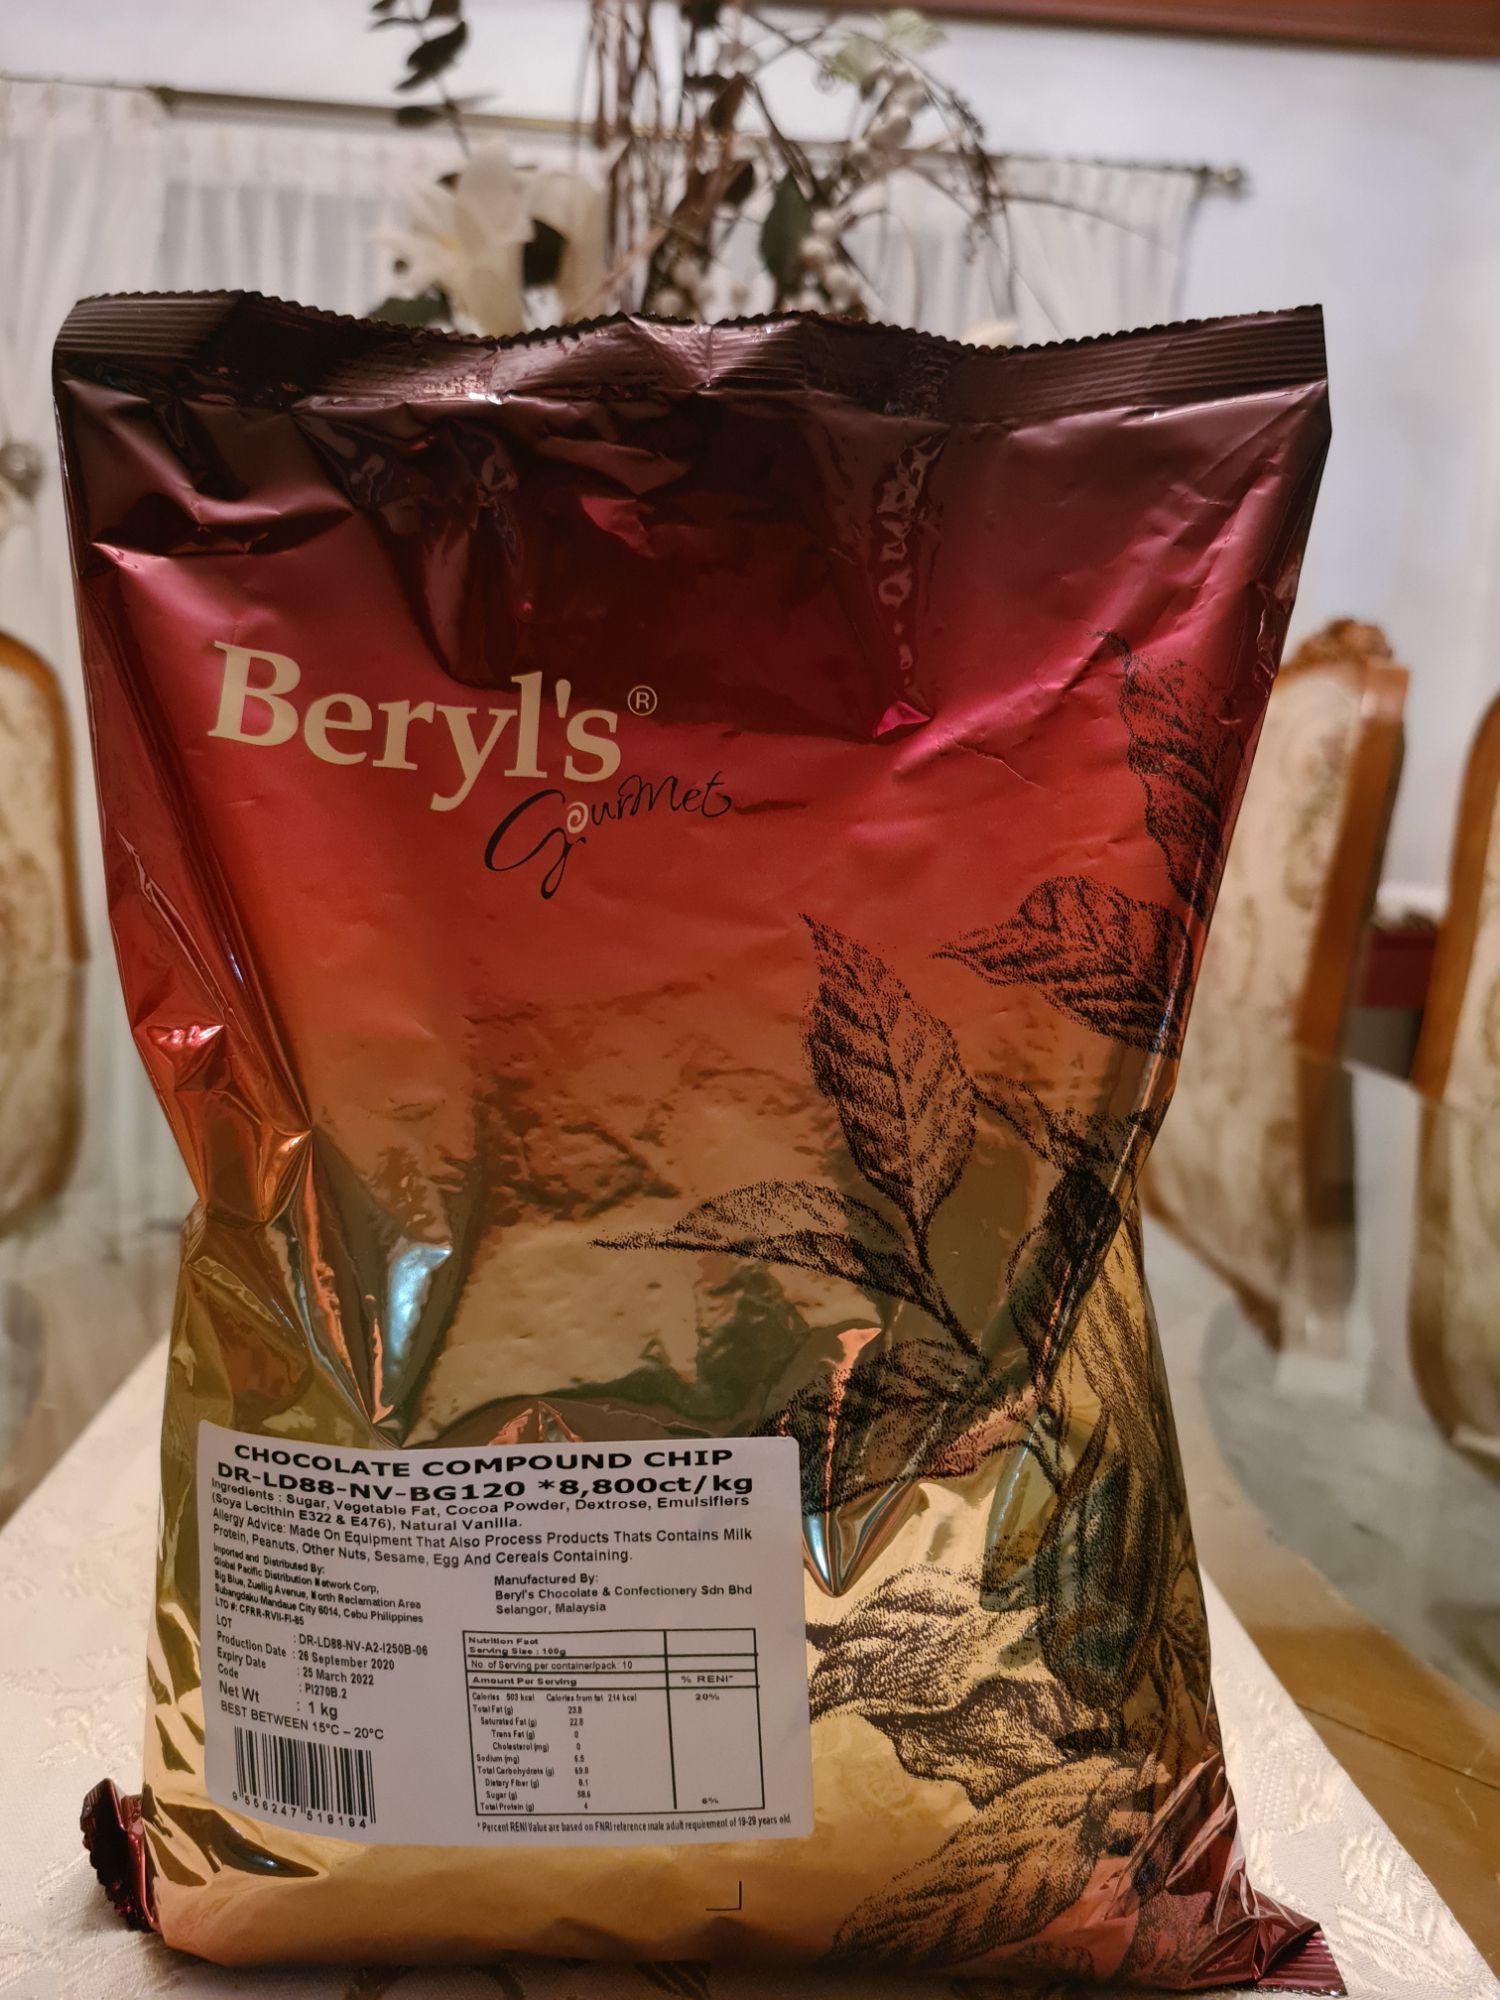 Beryl's Dark Compound Chocolate Chips